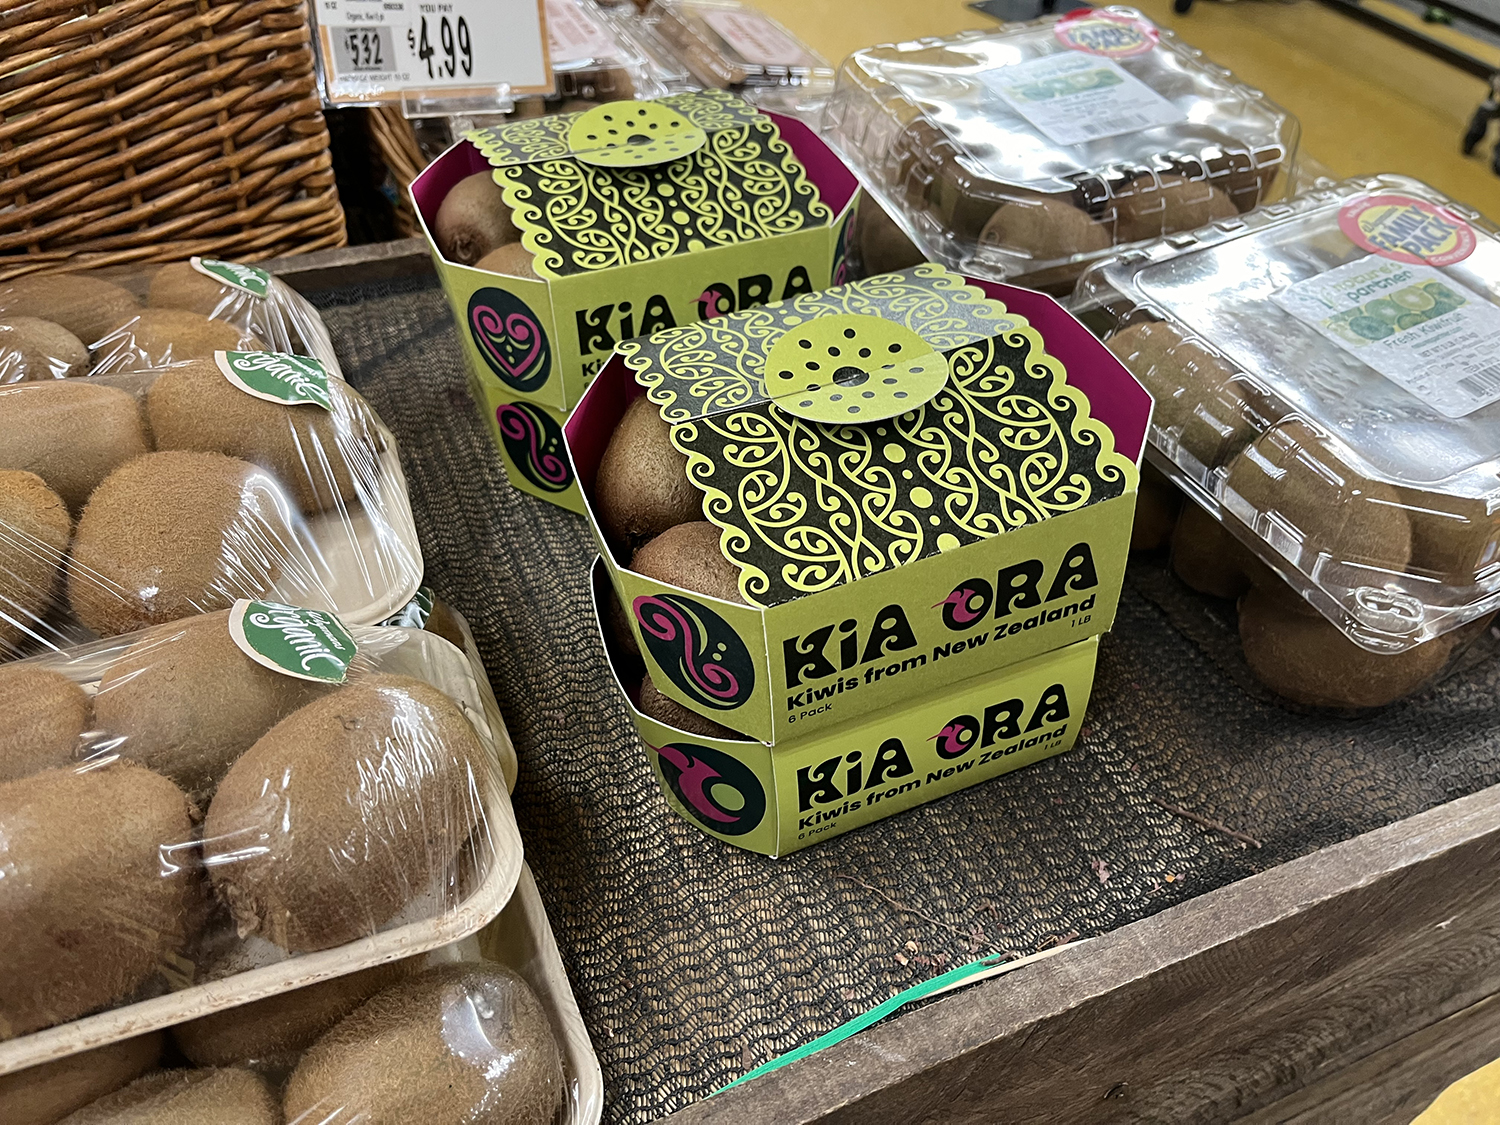 kiwi packaging in store setting